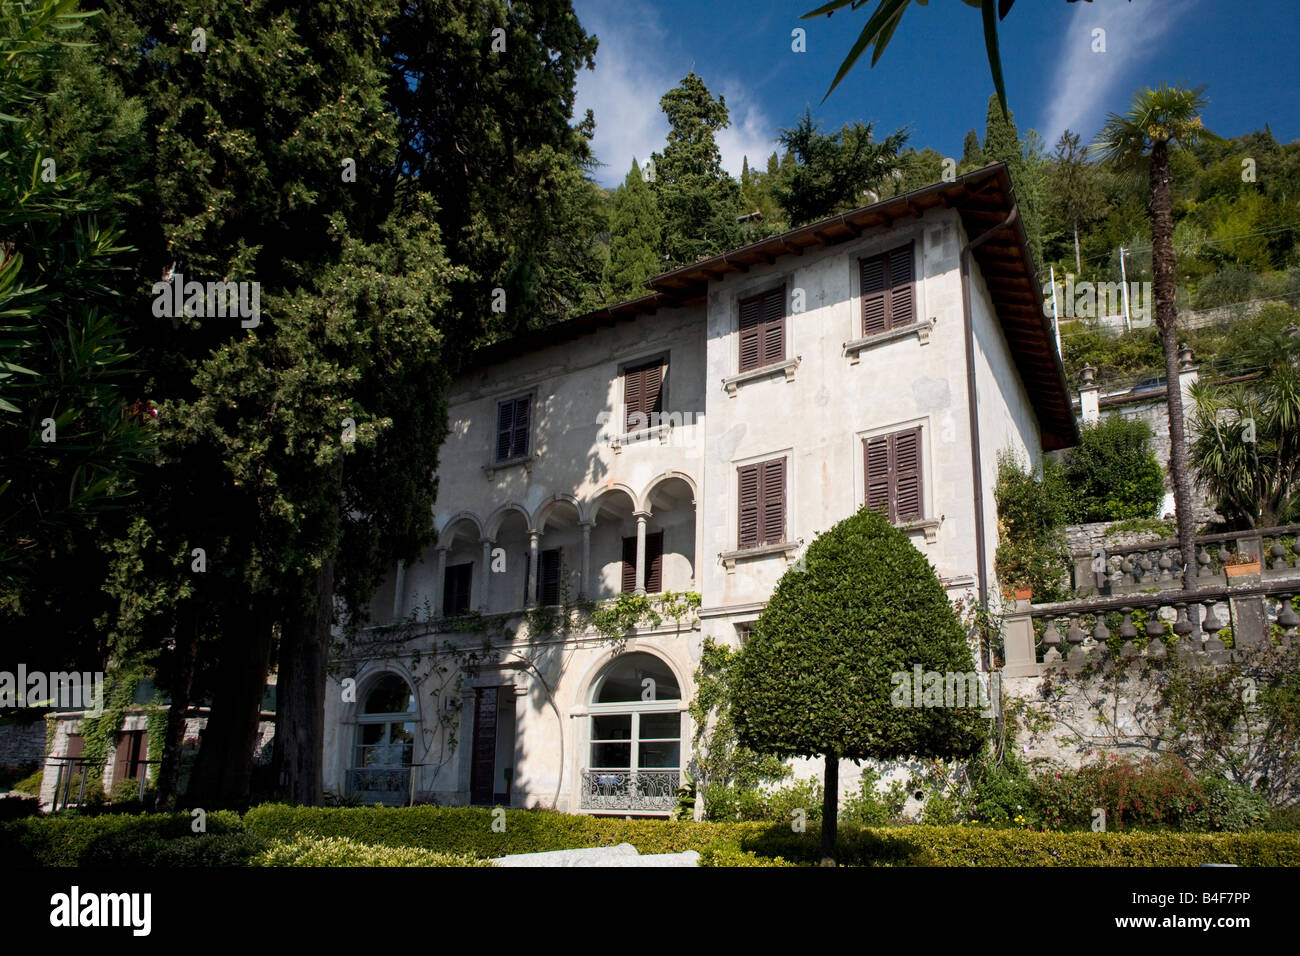 Villa Monastero, Varenna, Lecco, Italy Stock Photo